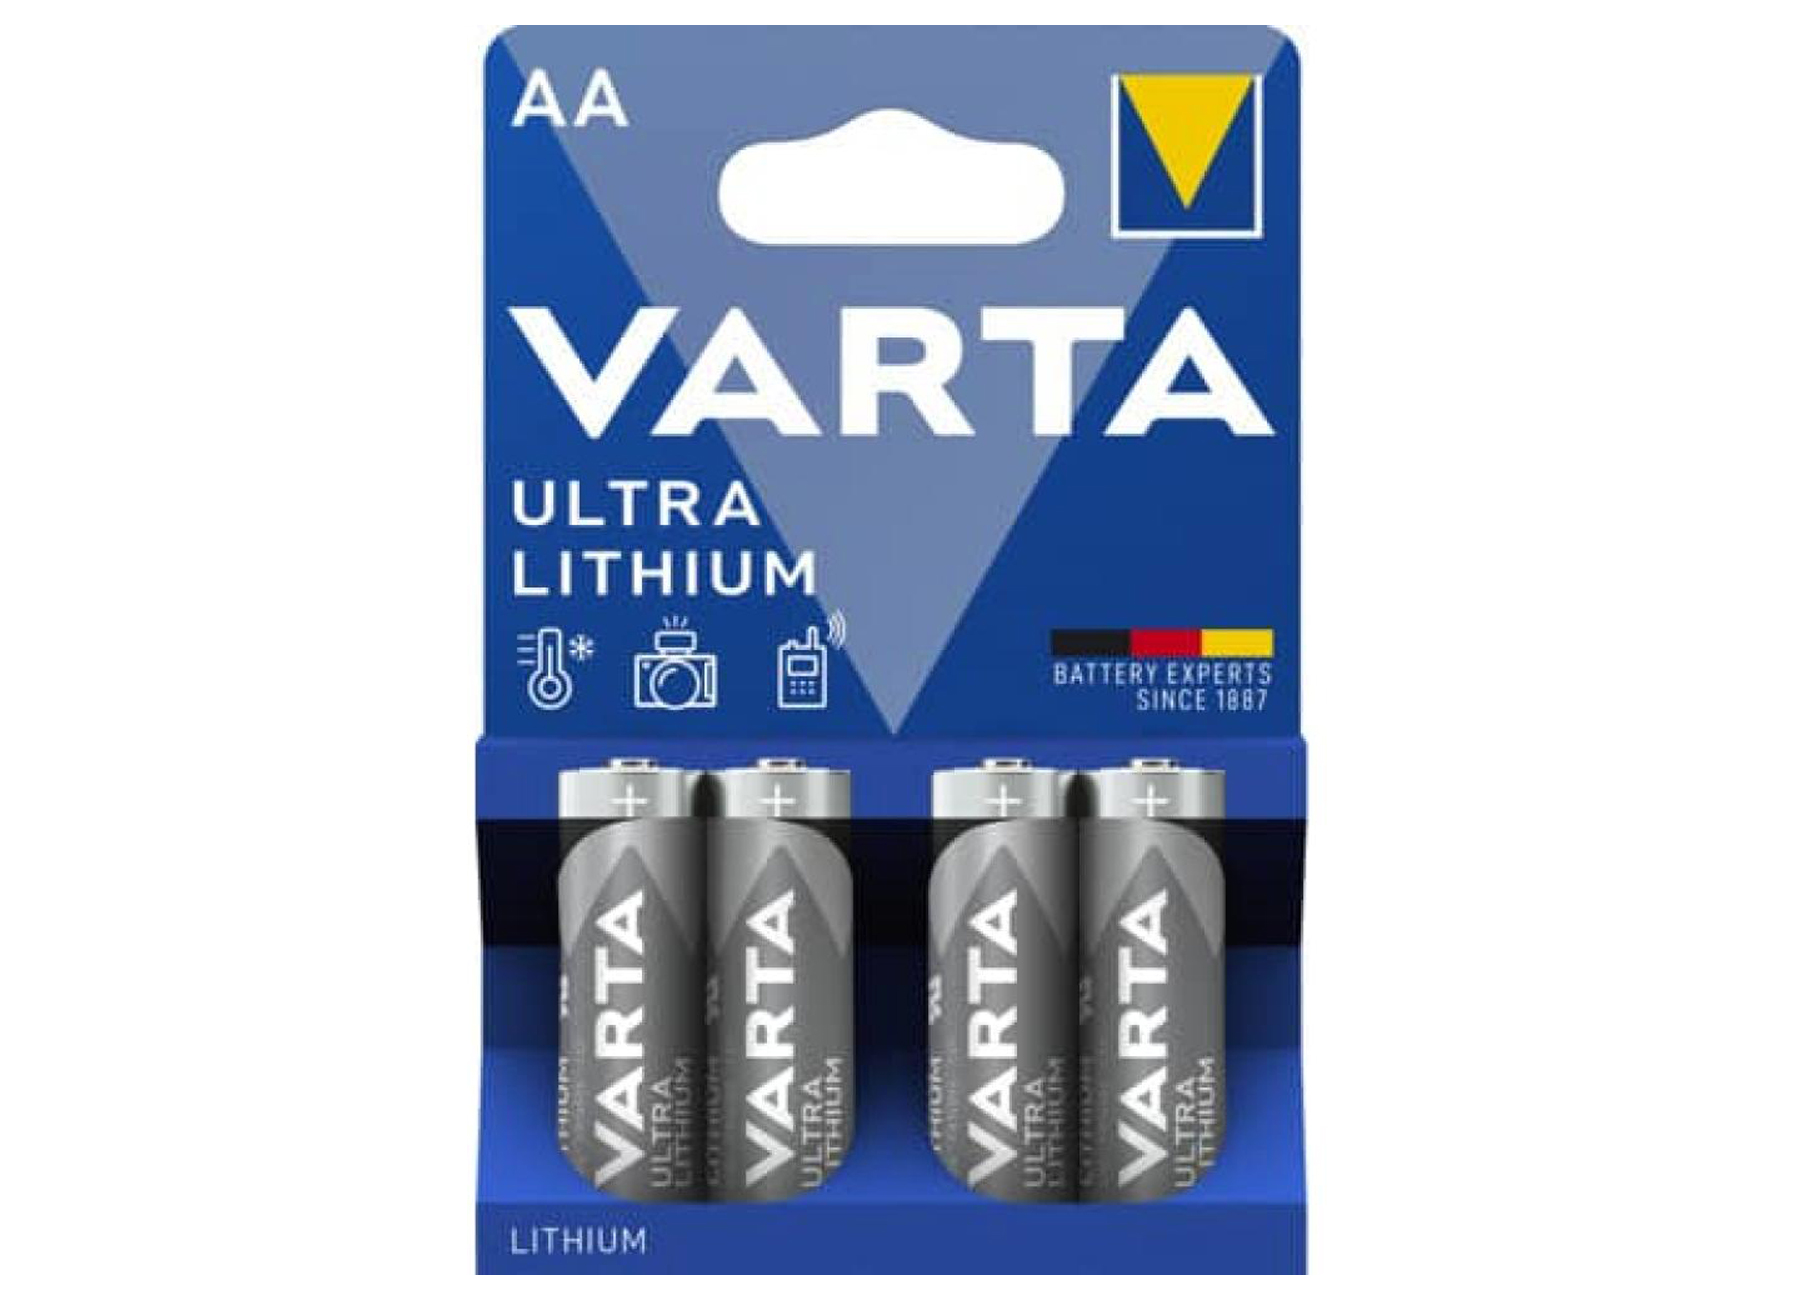 VARTA ULTRA LITHIUM LR06 AA 4 PACK